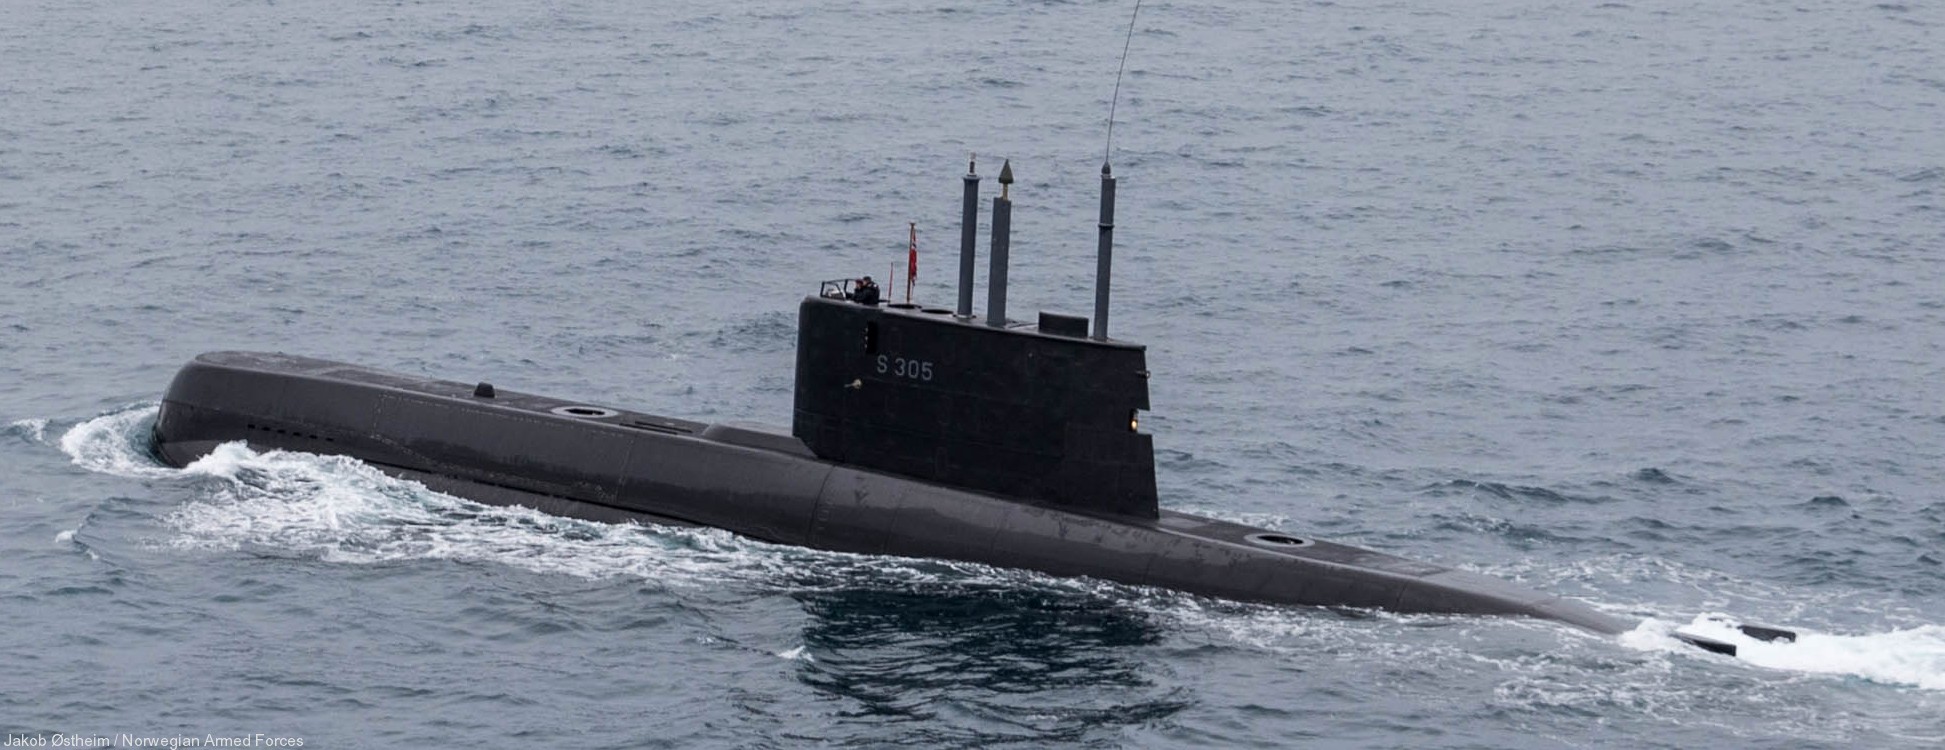 s-305 hnoms knm uredd ula class submarine type 210 attack ssk undervannsbåt royal norwegian navy sjøforsvaret 09